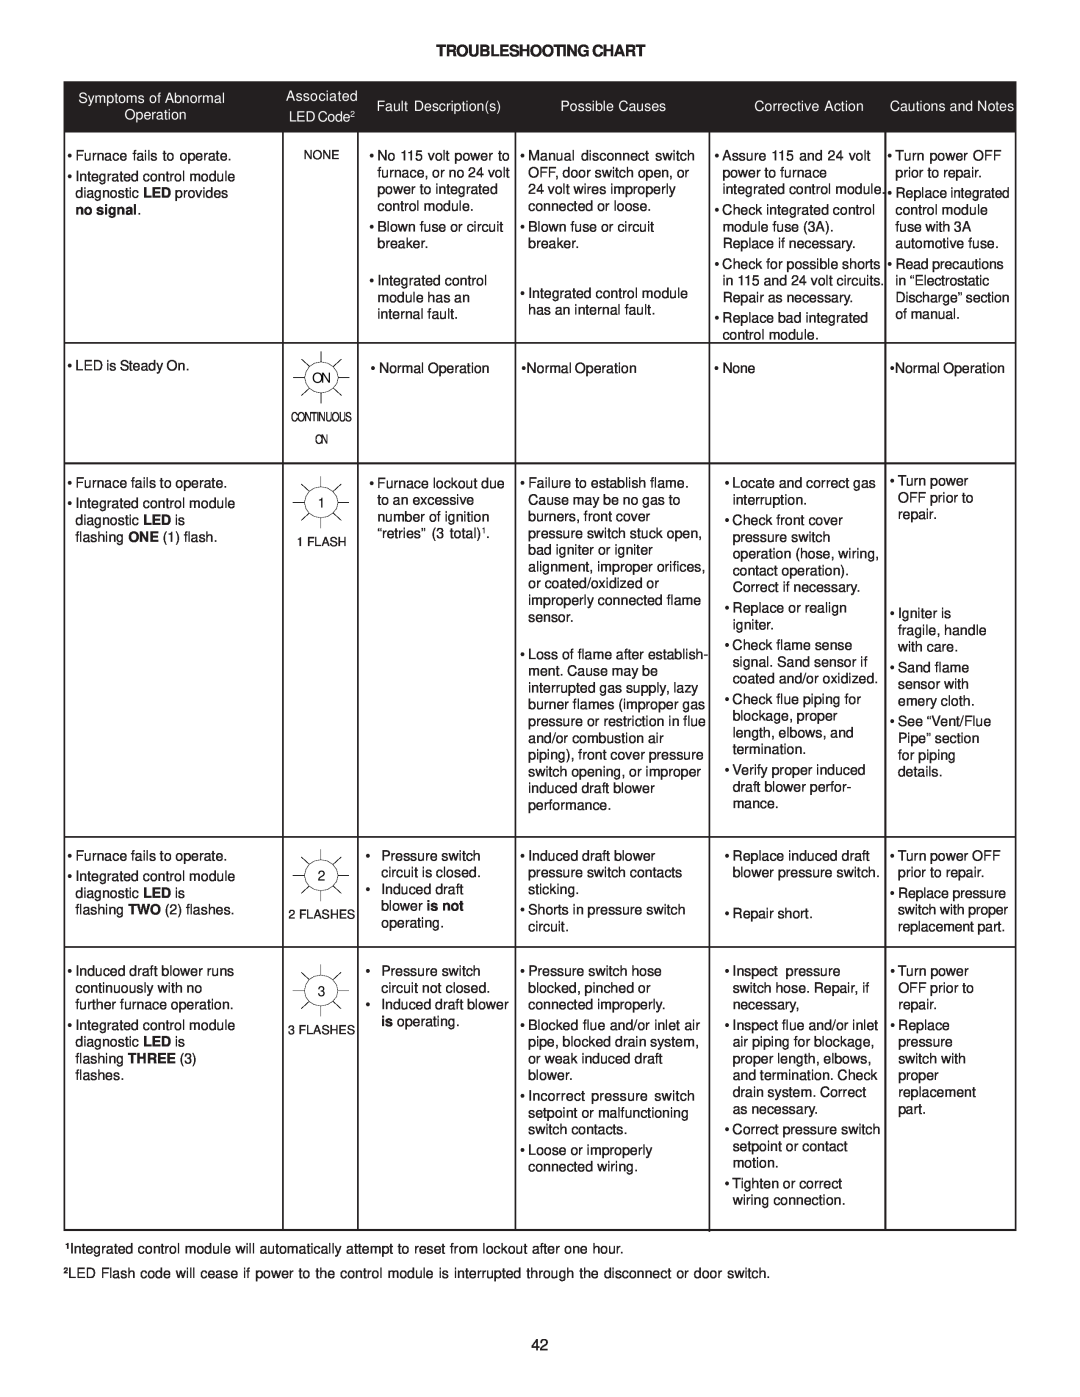 Goodman Mfg MH95/ACSH96/AMEH96/ GCH95/GME95/GCH9 Troubleshooting Chart, Symptoms of Abnormal, Fault Descriptions 